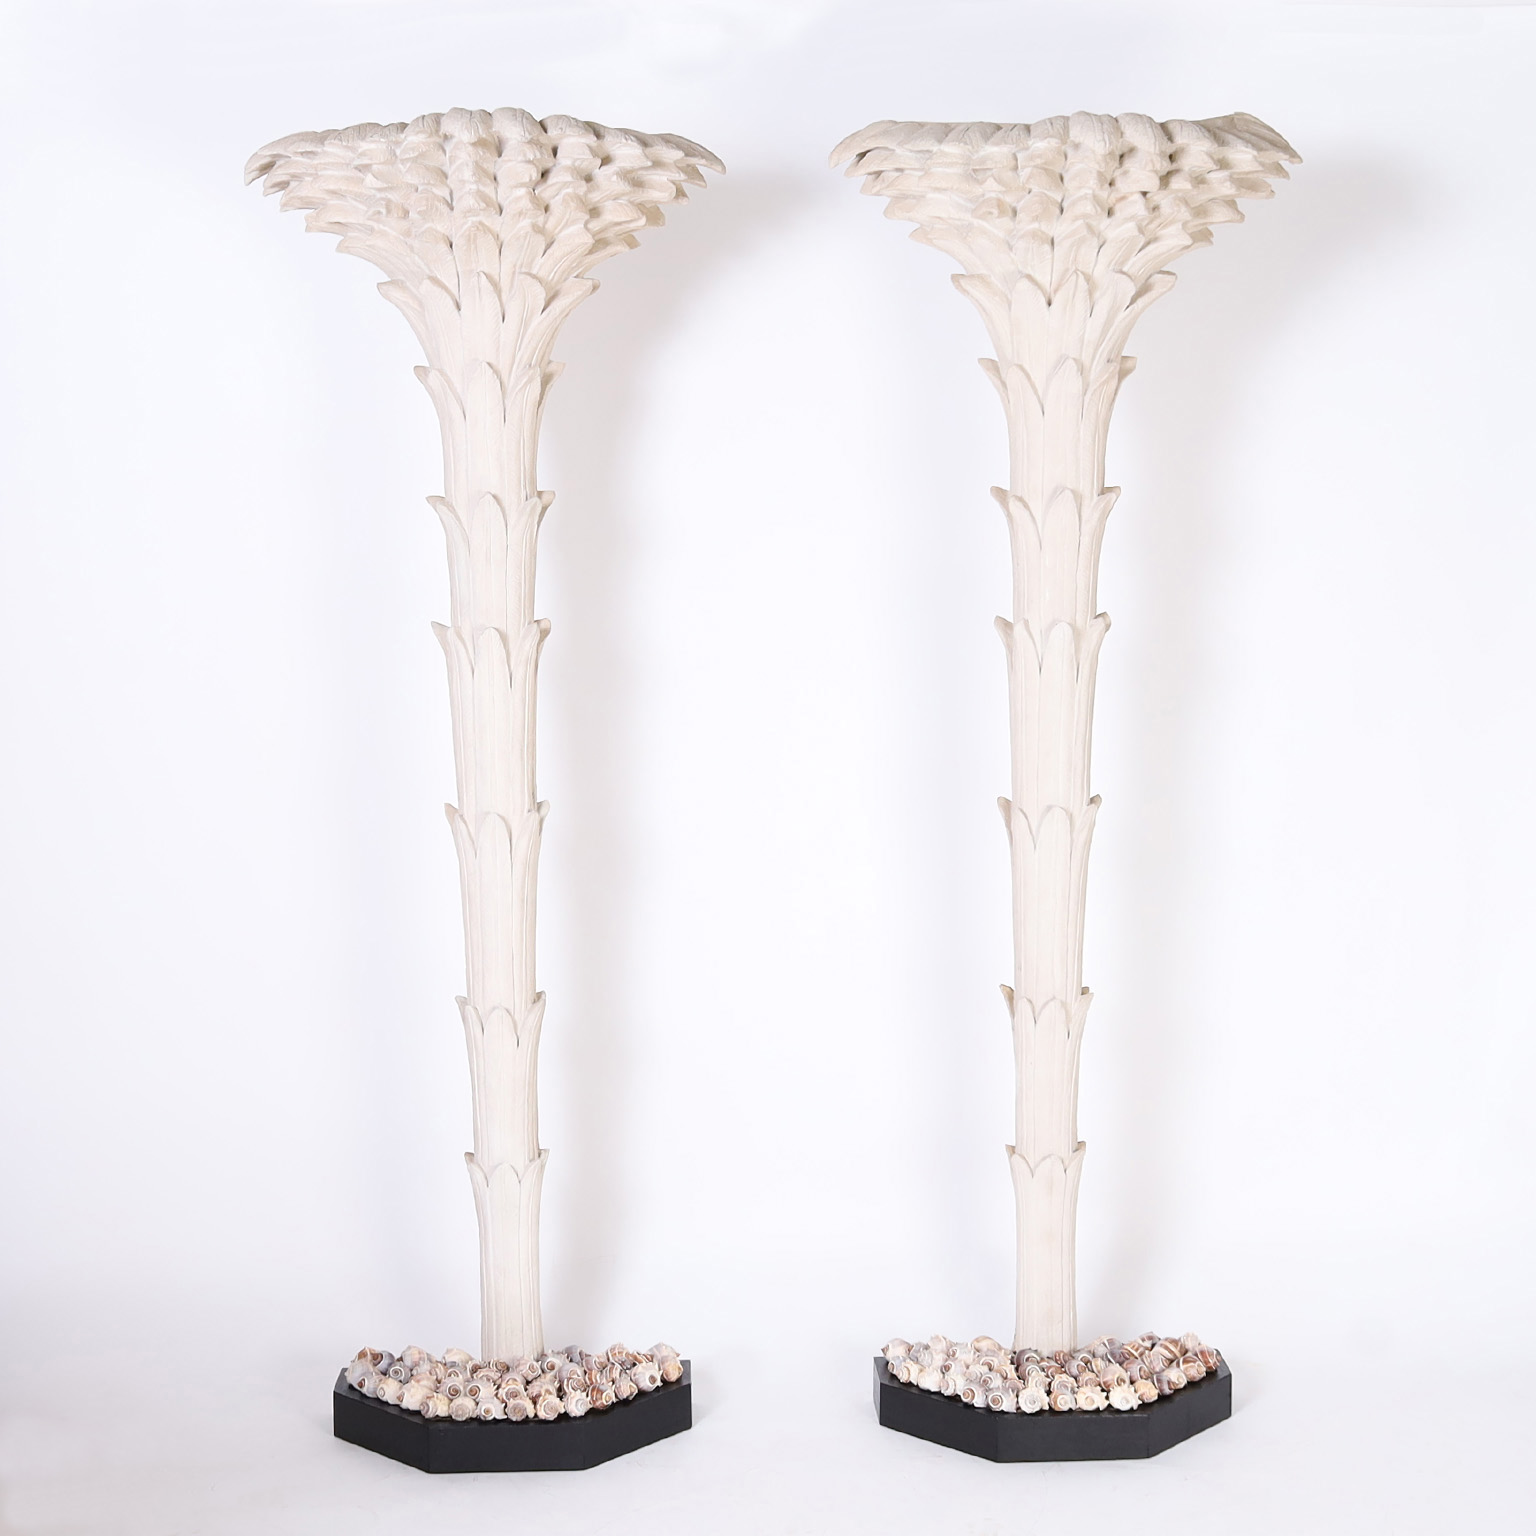 Pair of Mid Century Palm Tree Decorative Sculpture with Seashells